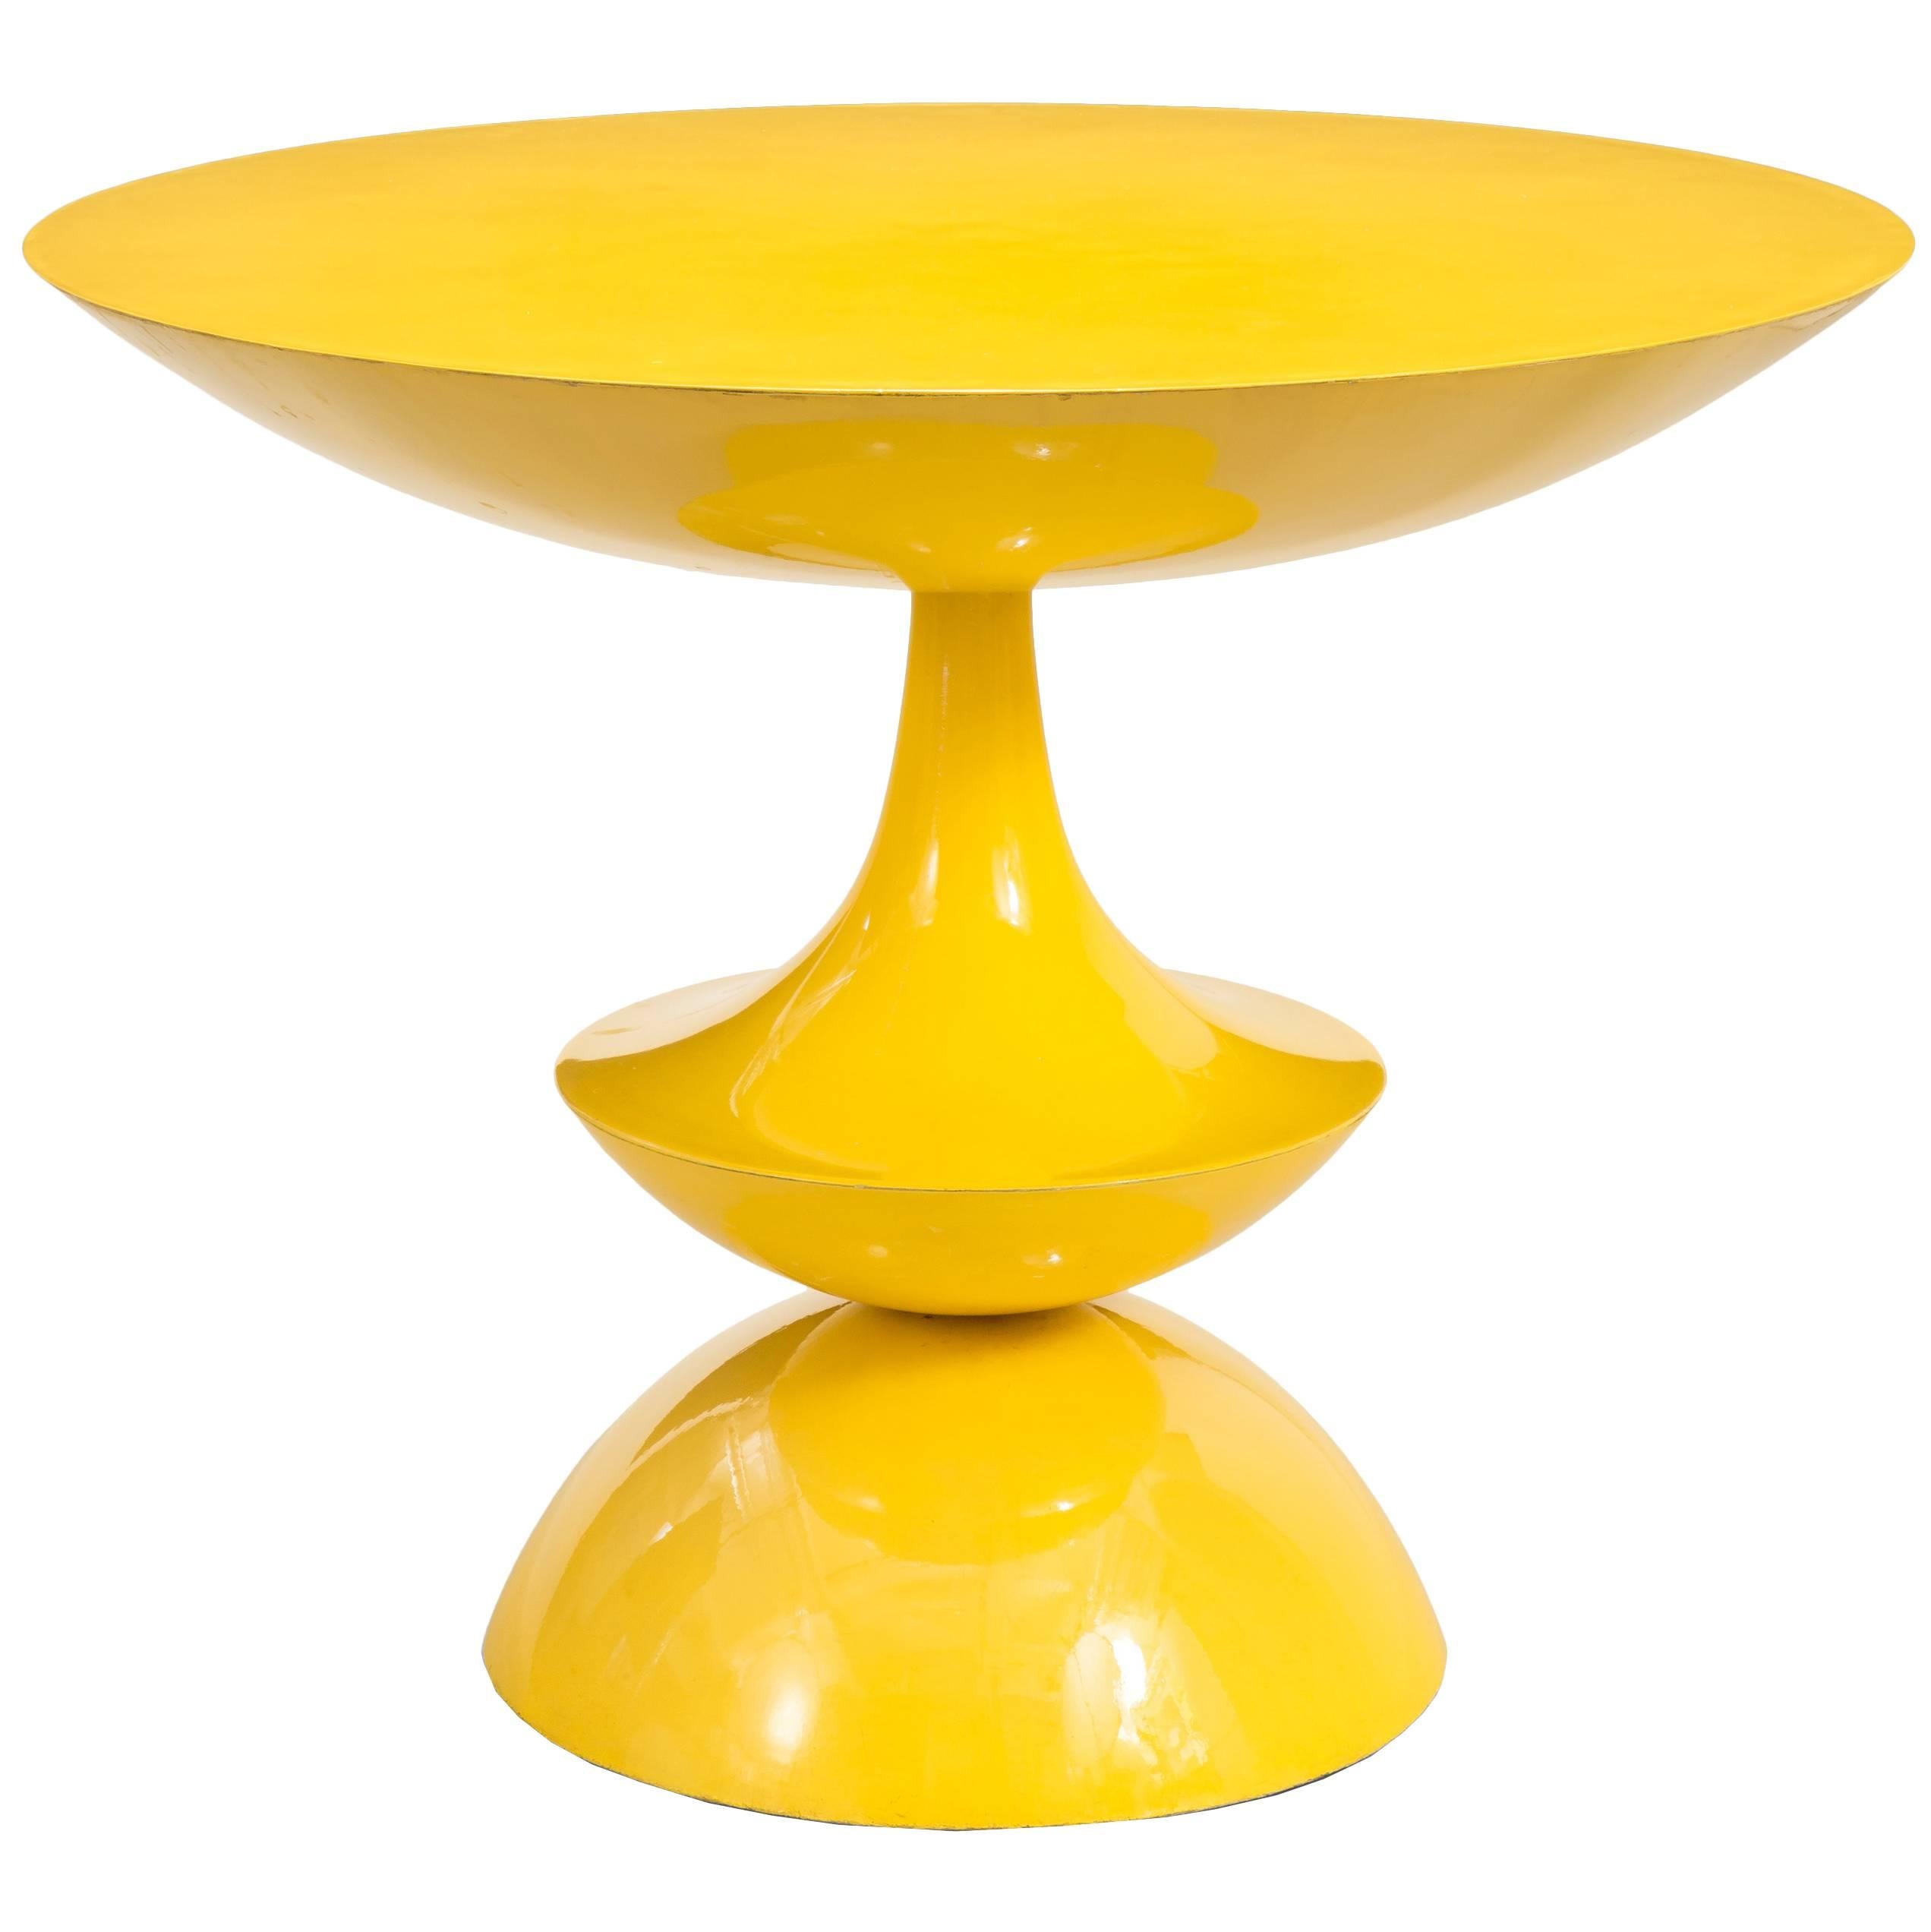 Nanna Ditzel, Rare Circular Yellow Fiberglass Table